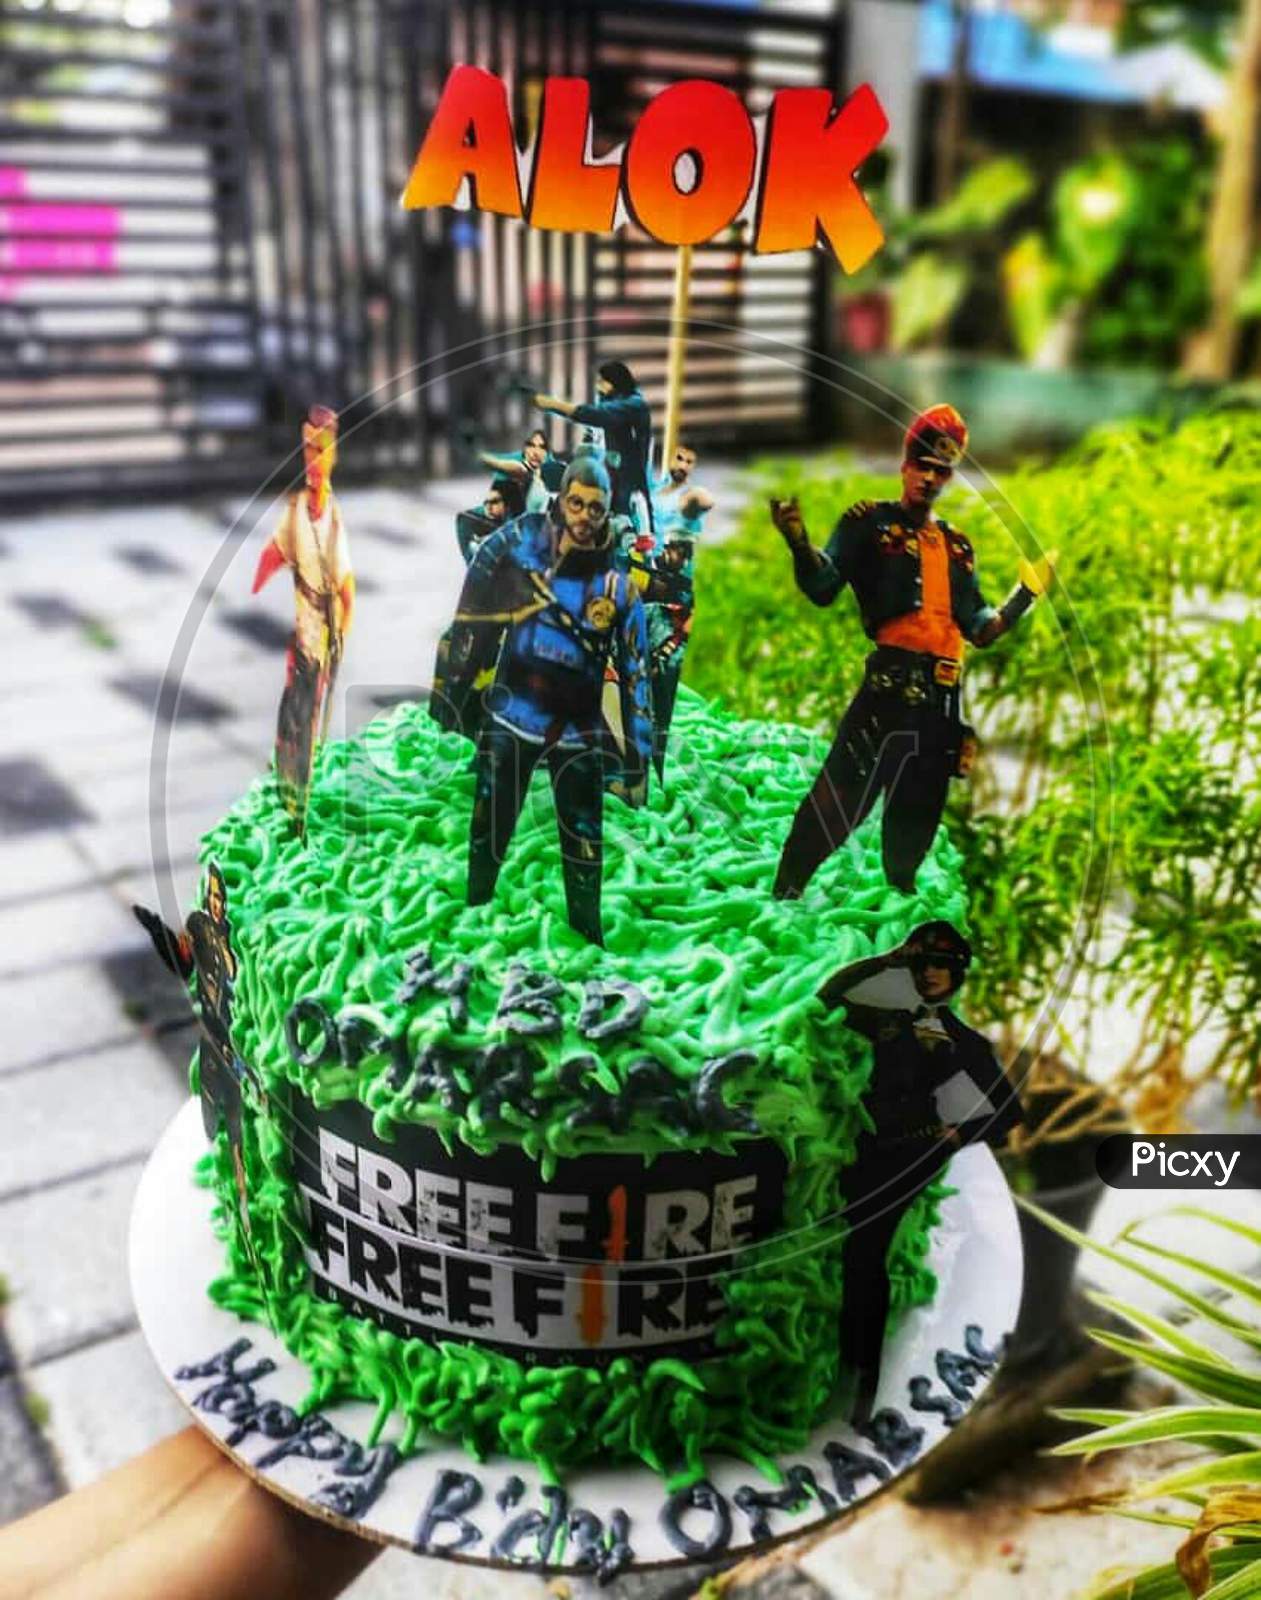 Image Of Free Fire Model Theme Cake Gj025904 Picxy